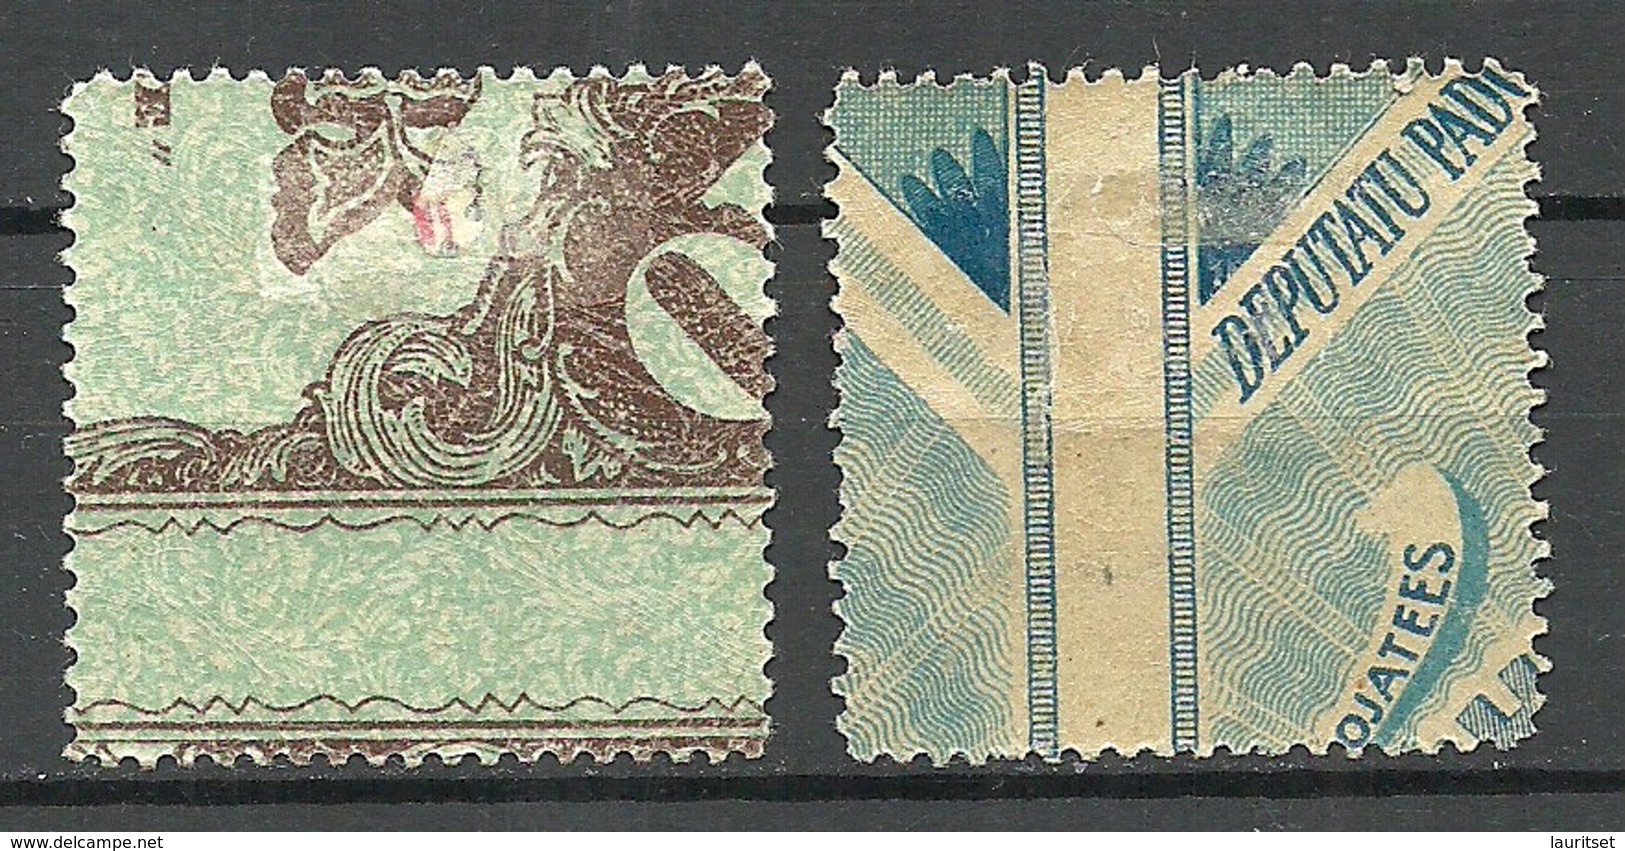 LETTLAND Latvia 1920 Michel 52 Y + Z * Stamp Printed On Bank Notes - Lettland